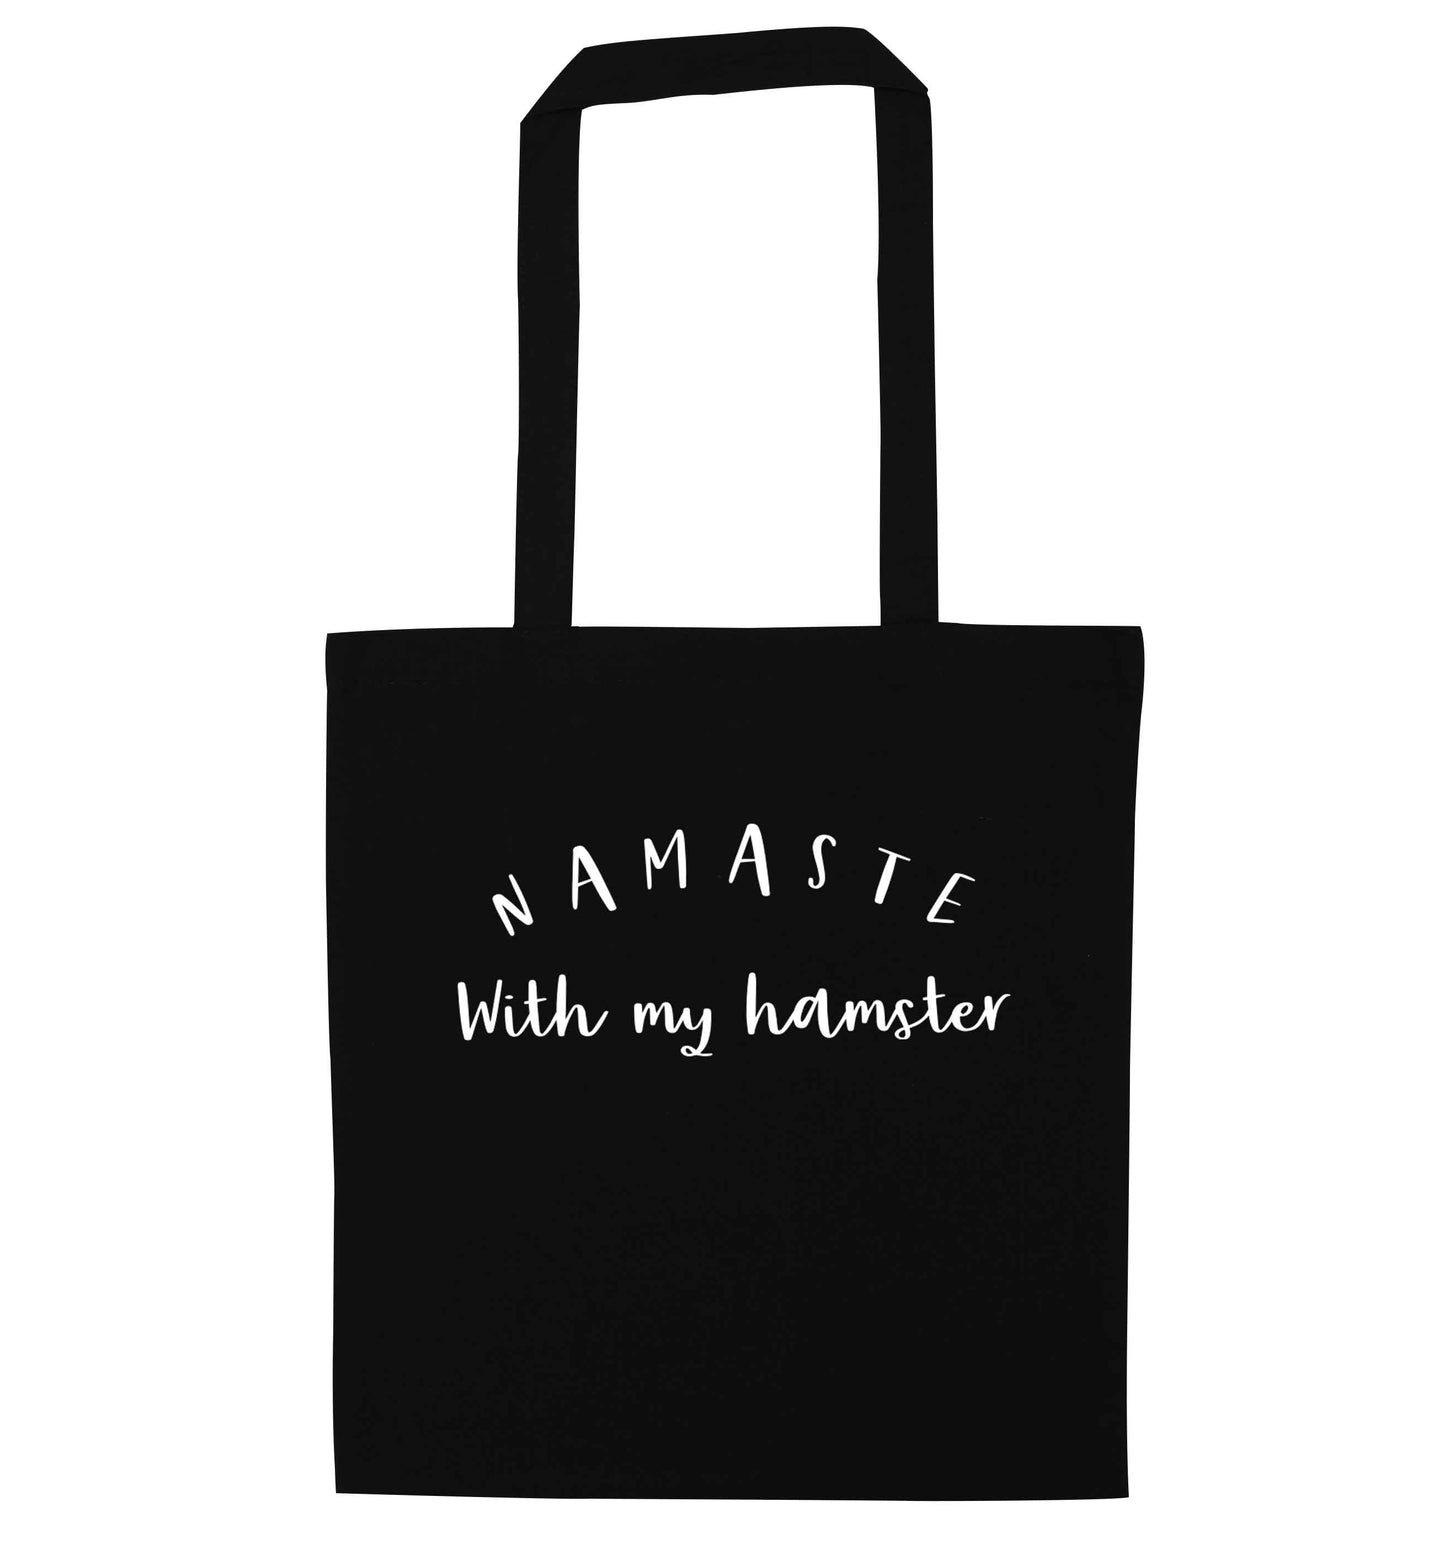 Namaste with my hamster black tote bag